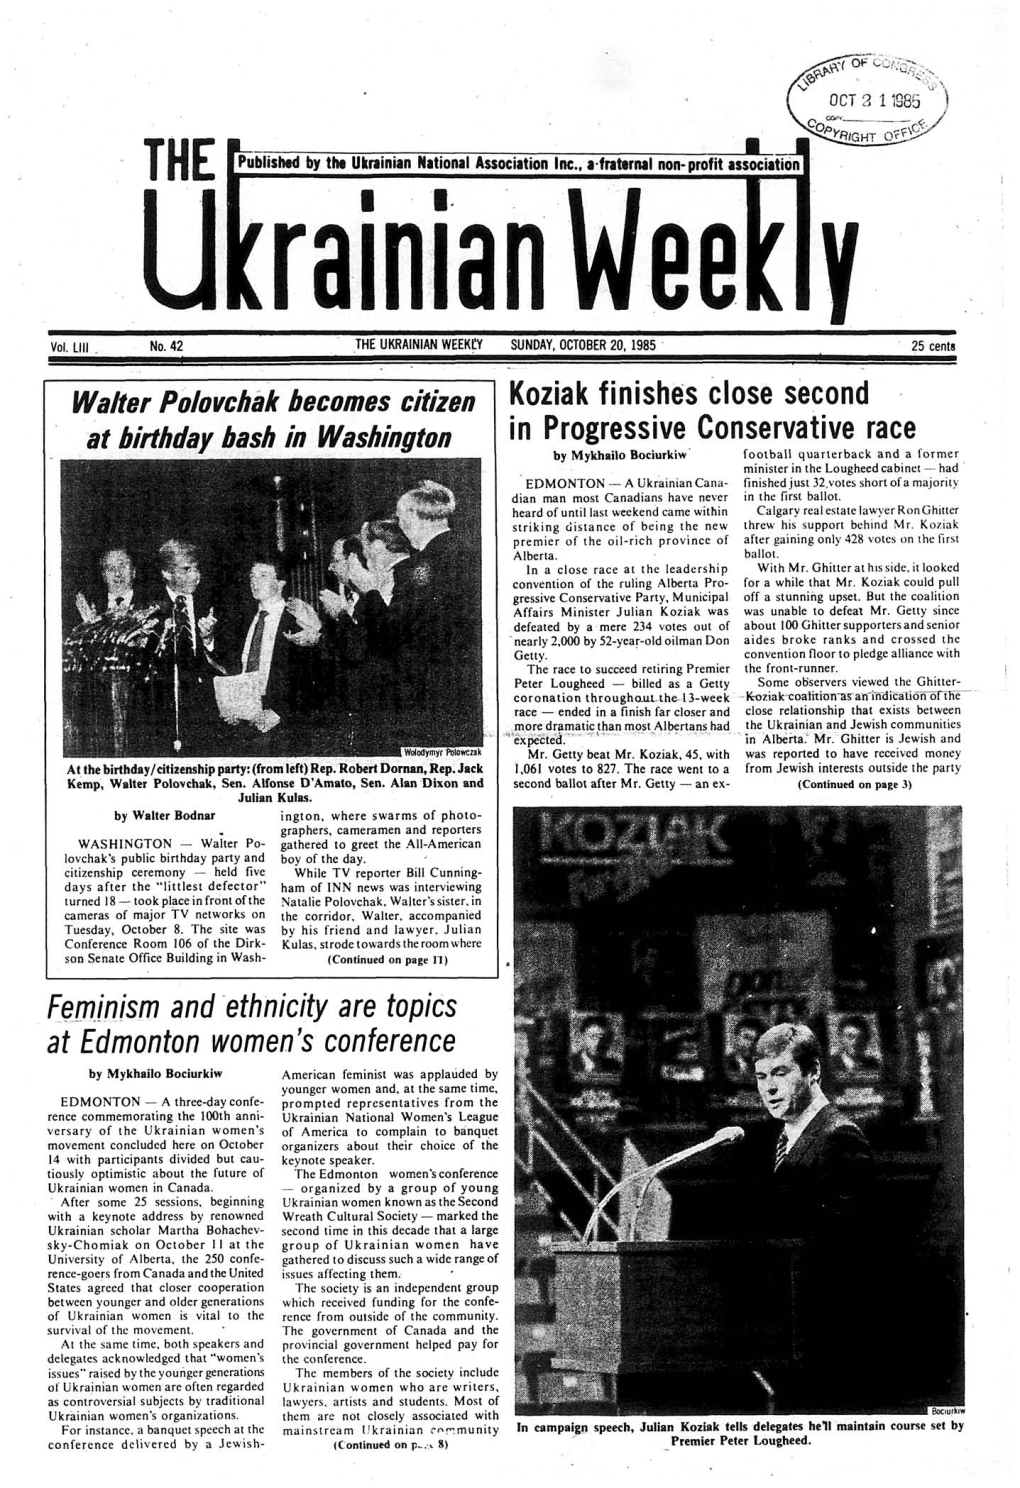 The Ukrainian Weekly 1985, No.42